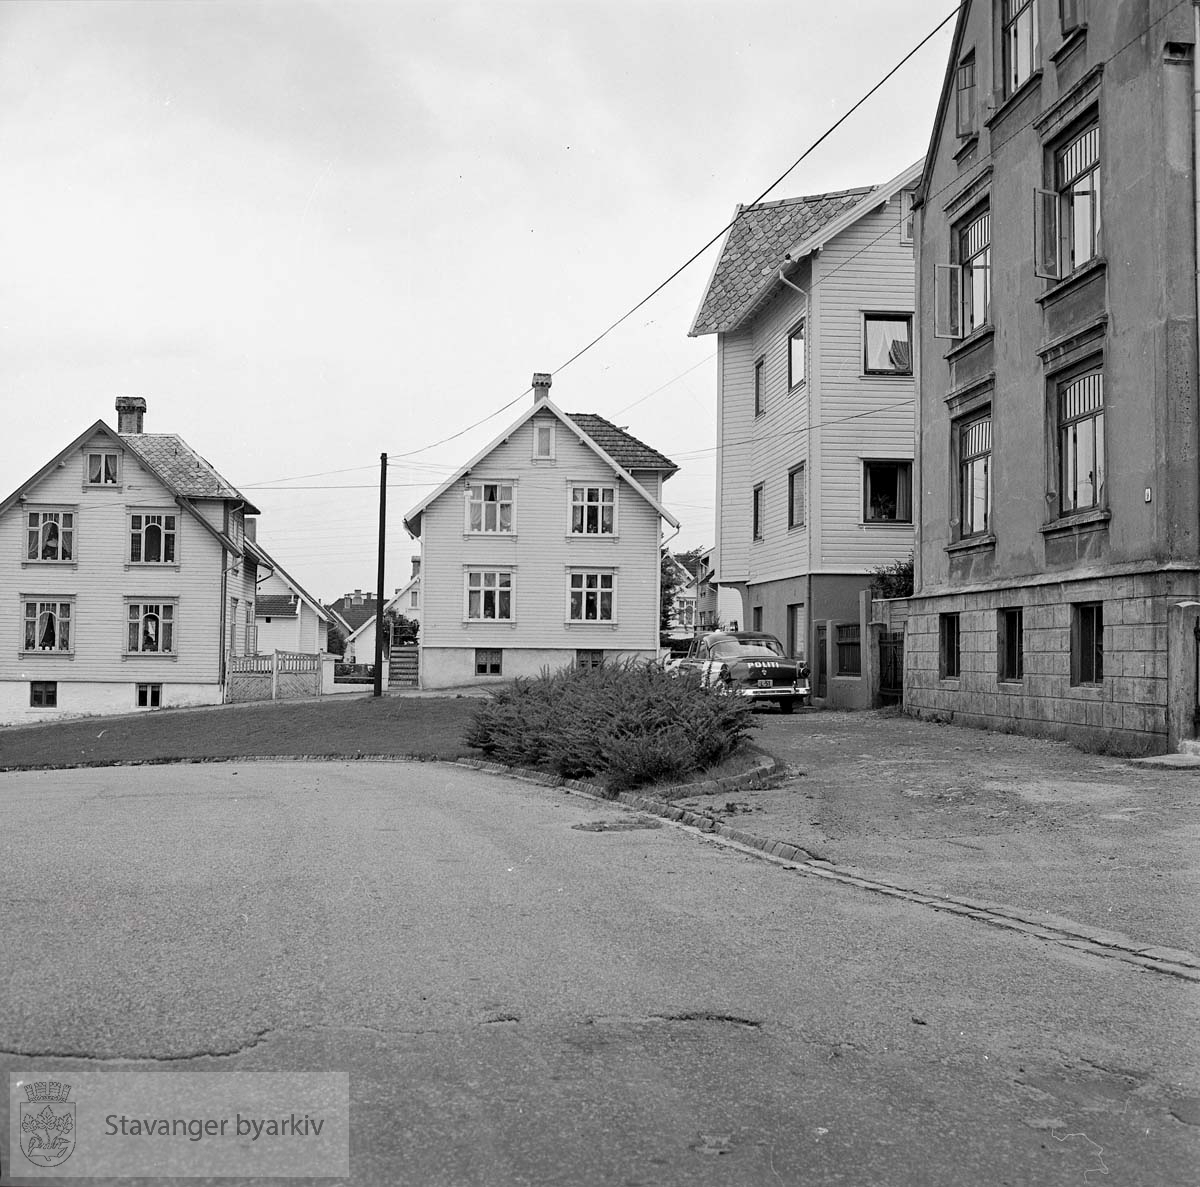 Fra venstre: Øvre Suldalsgate 9, 7, Høgsfjordgata 11 og 9 (murhuset nærmest). En politibil står parkert i gata.